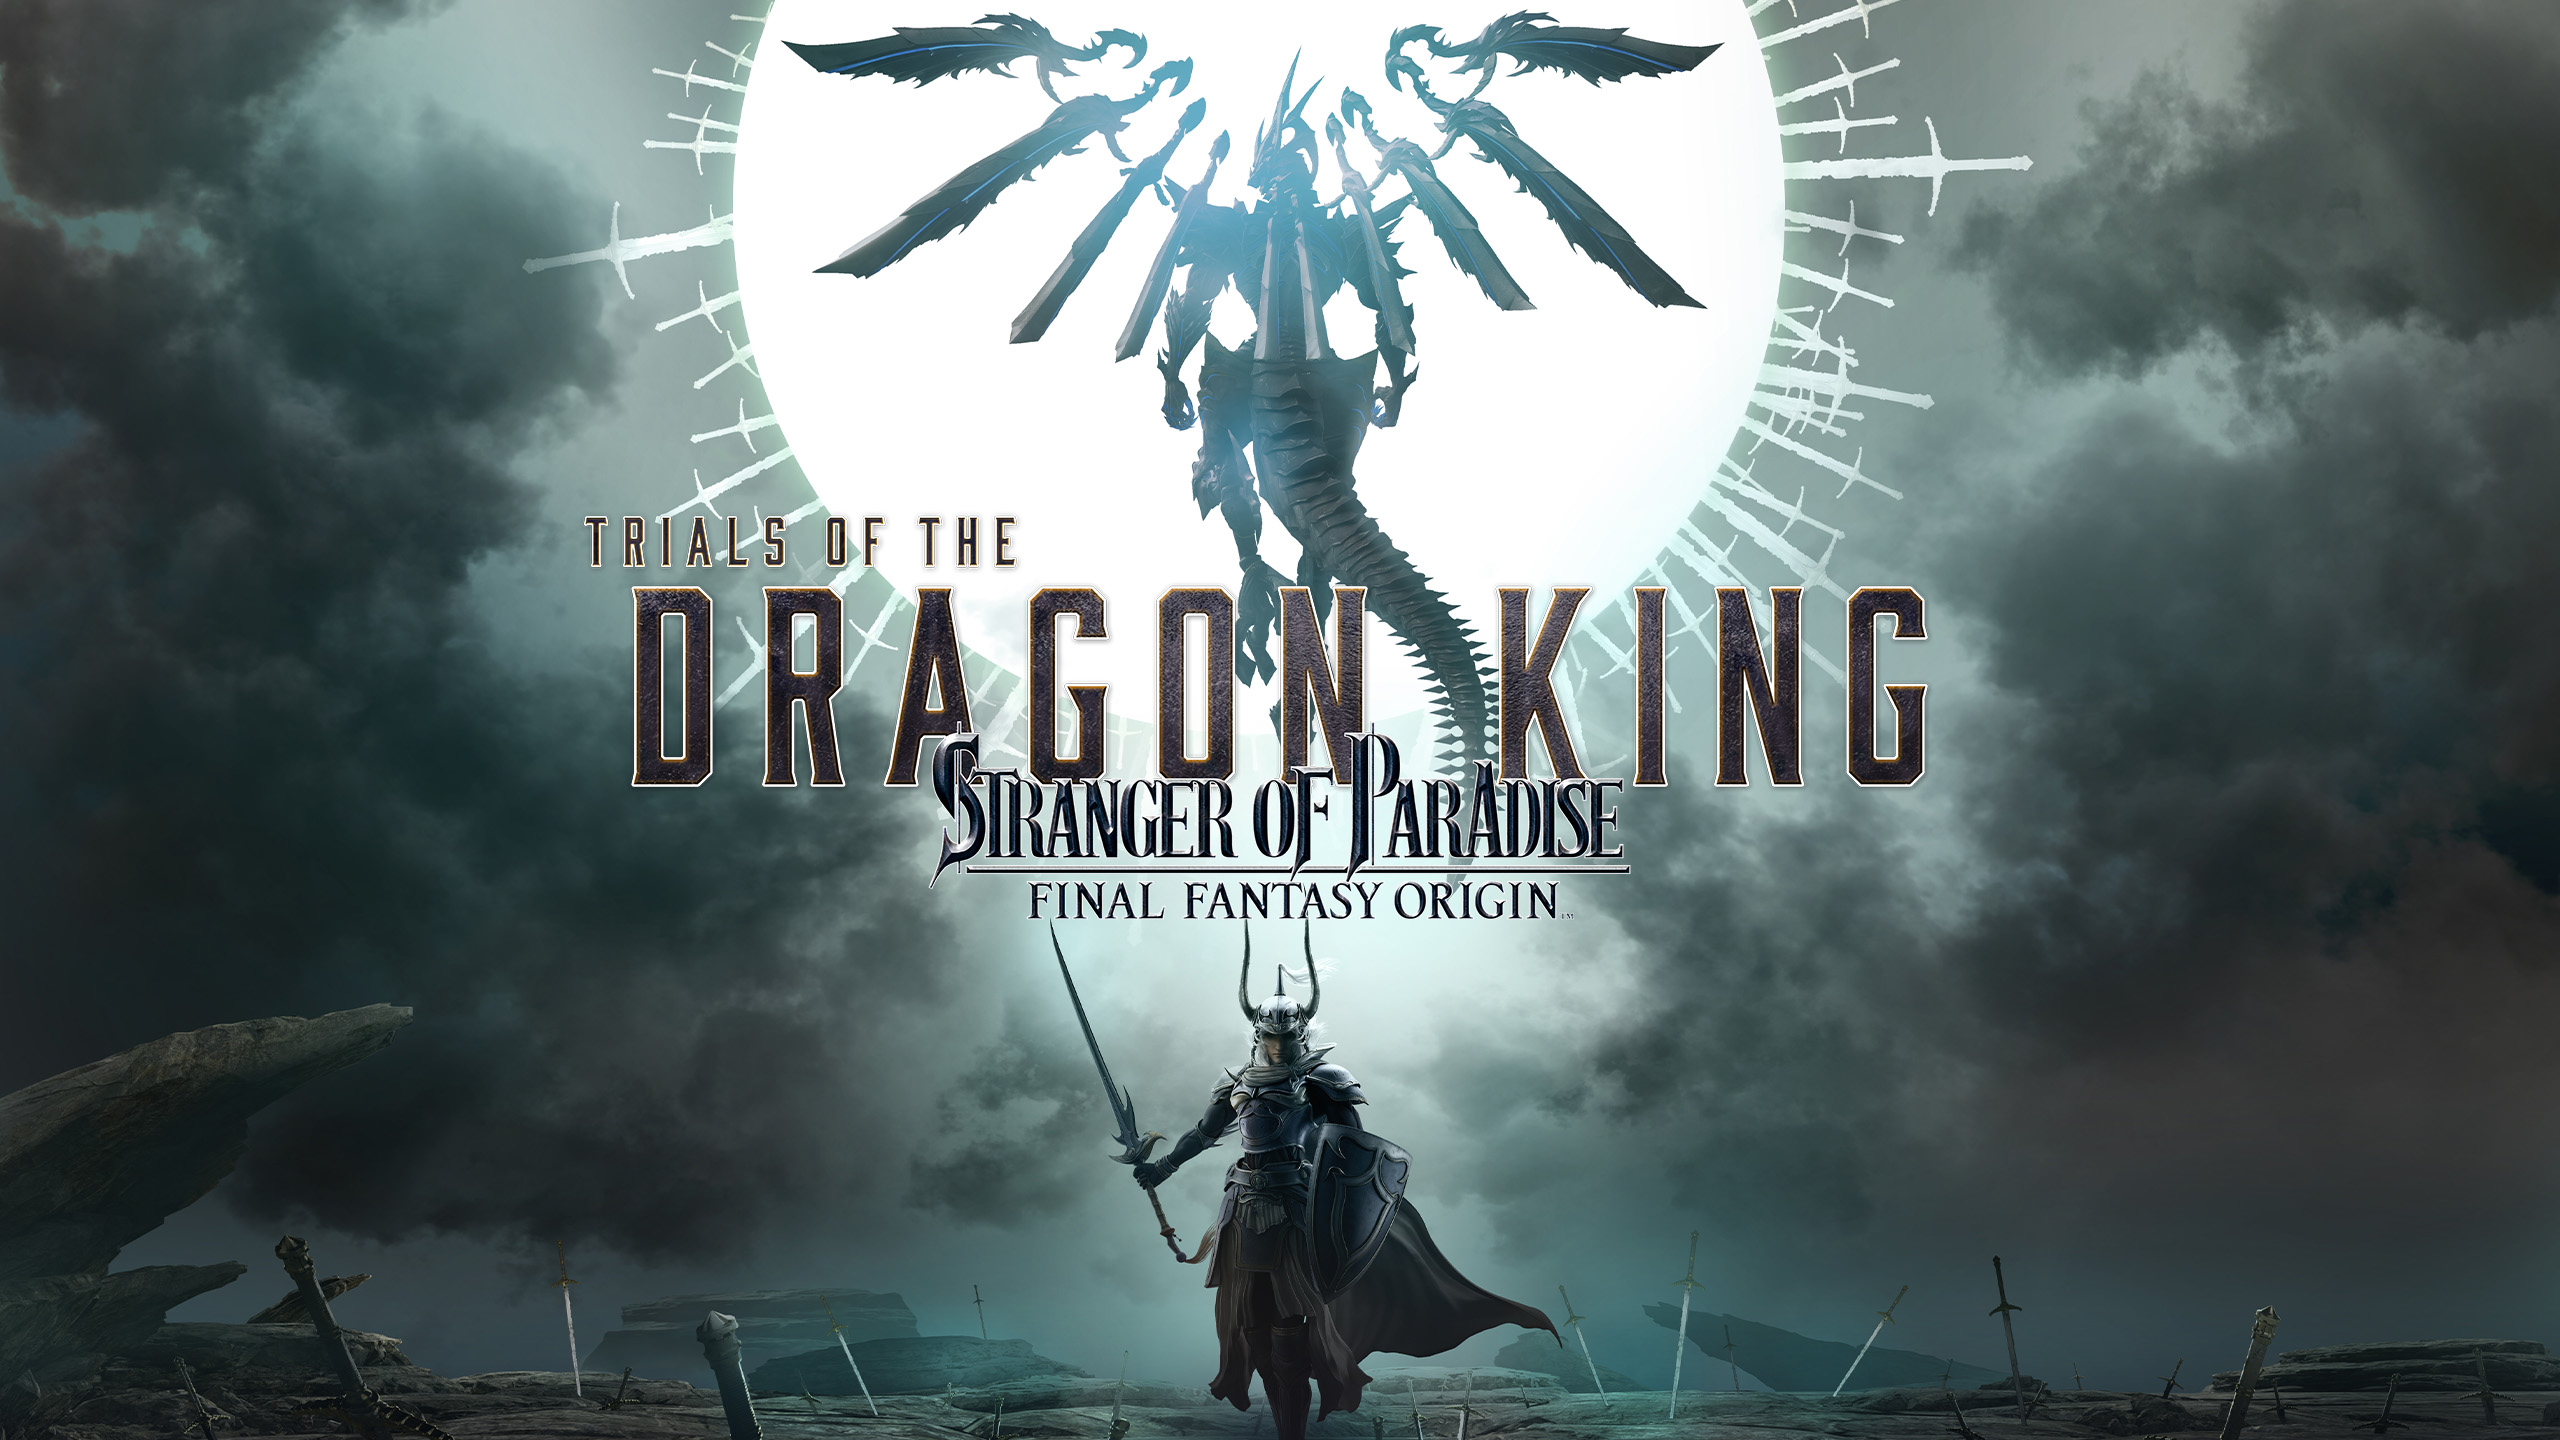 Stranger of Paradise: Final Fantasy Origin - Trials of The Dragon King DLC